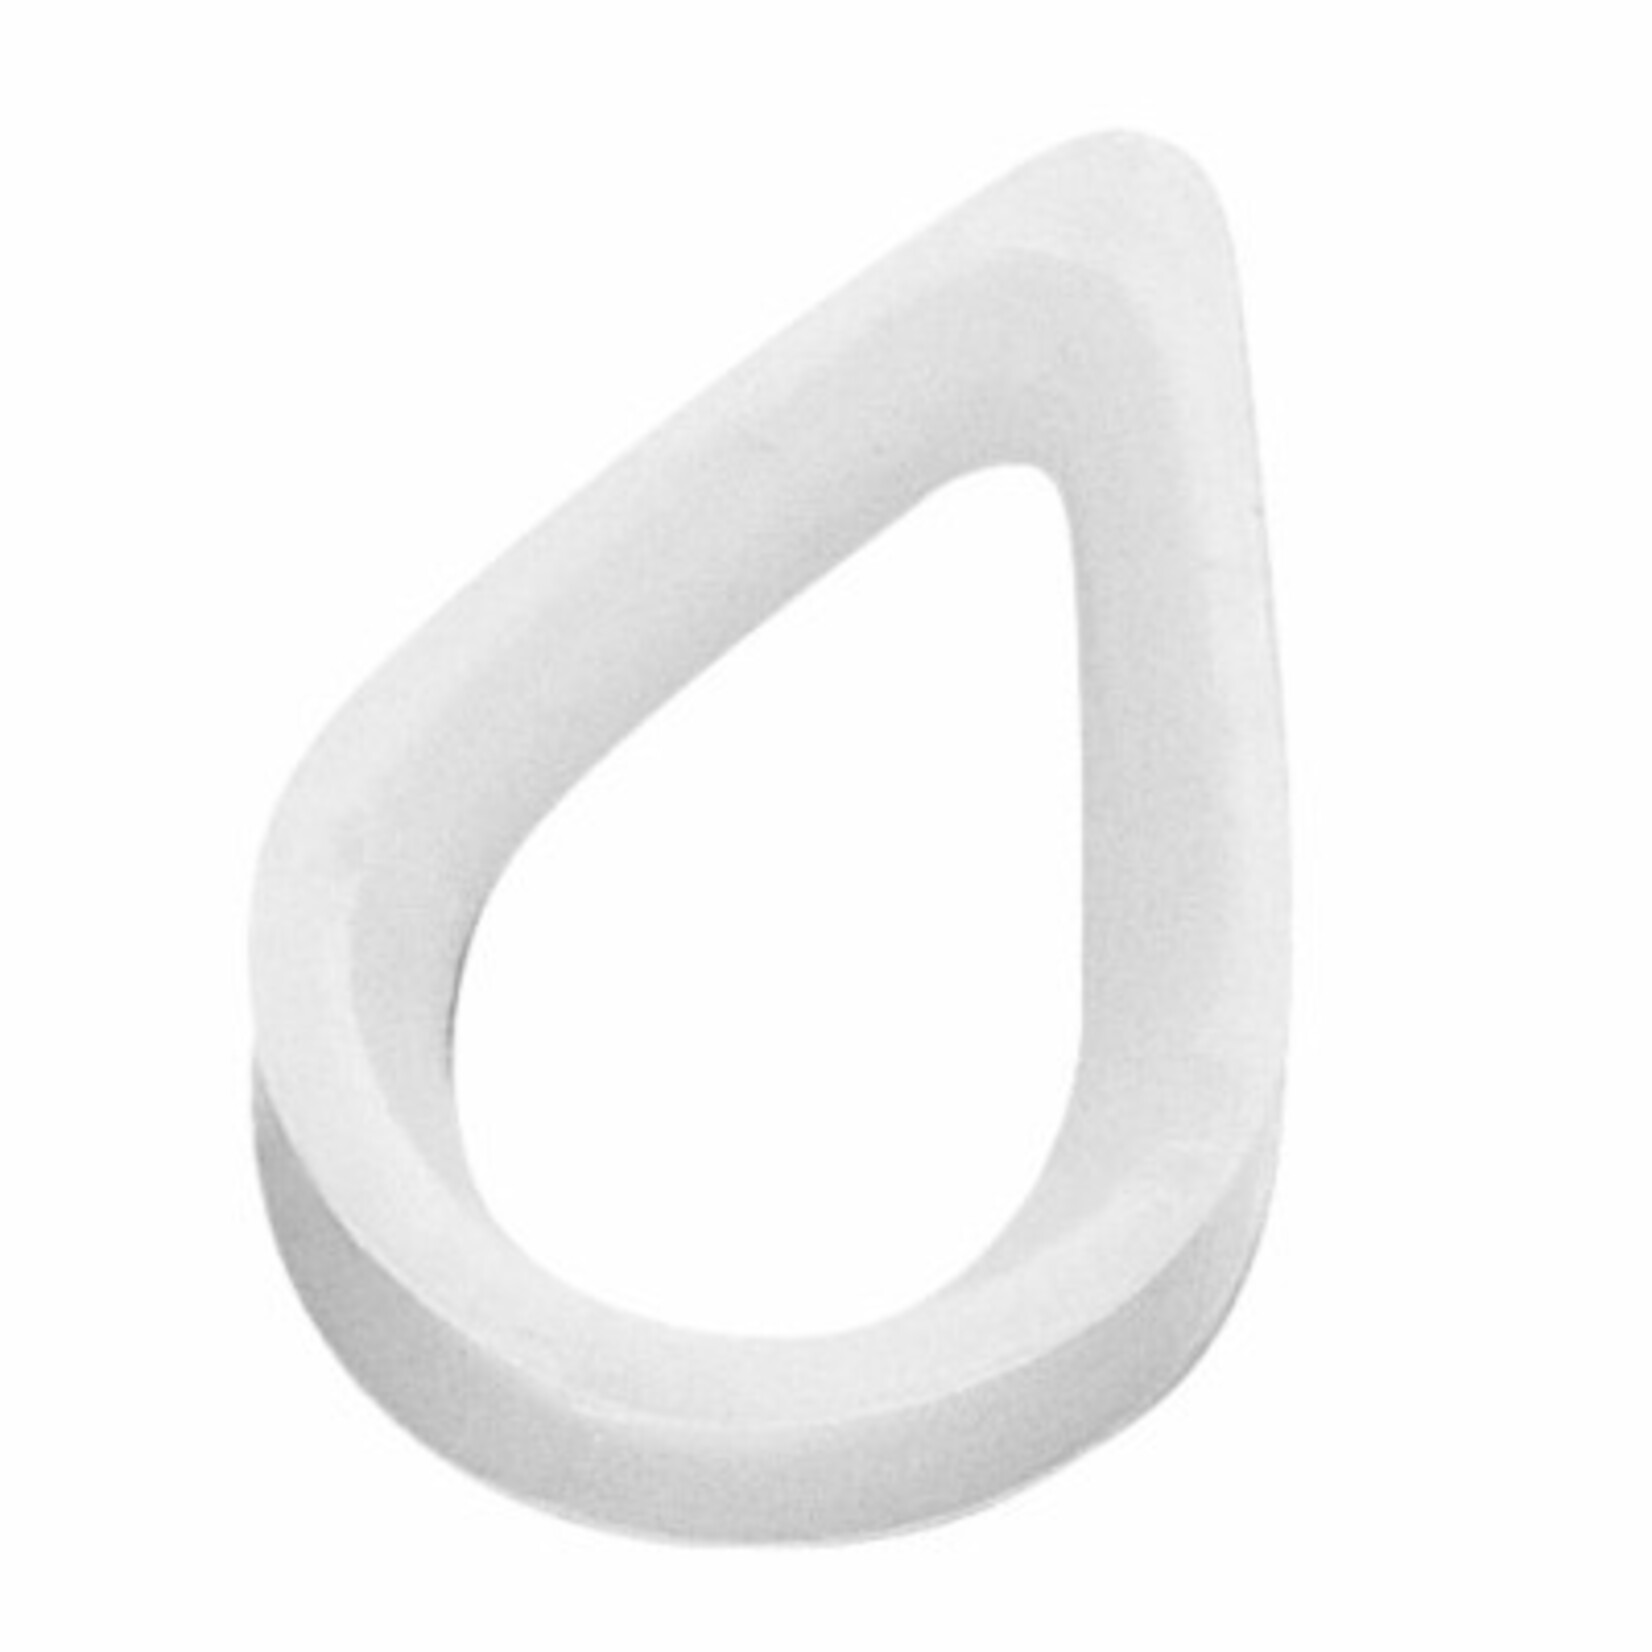 Plastimo White nylon thimble 7mm